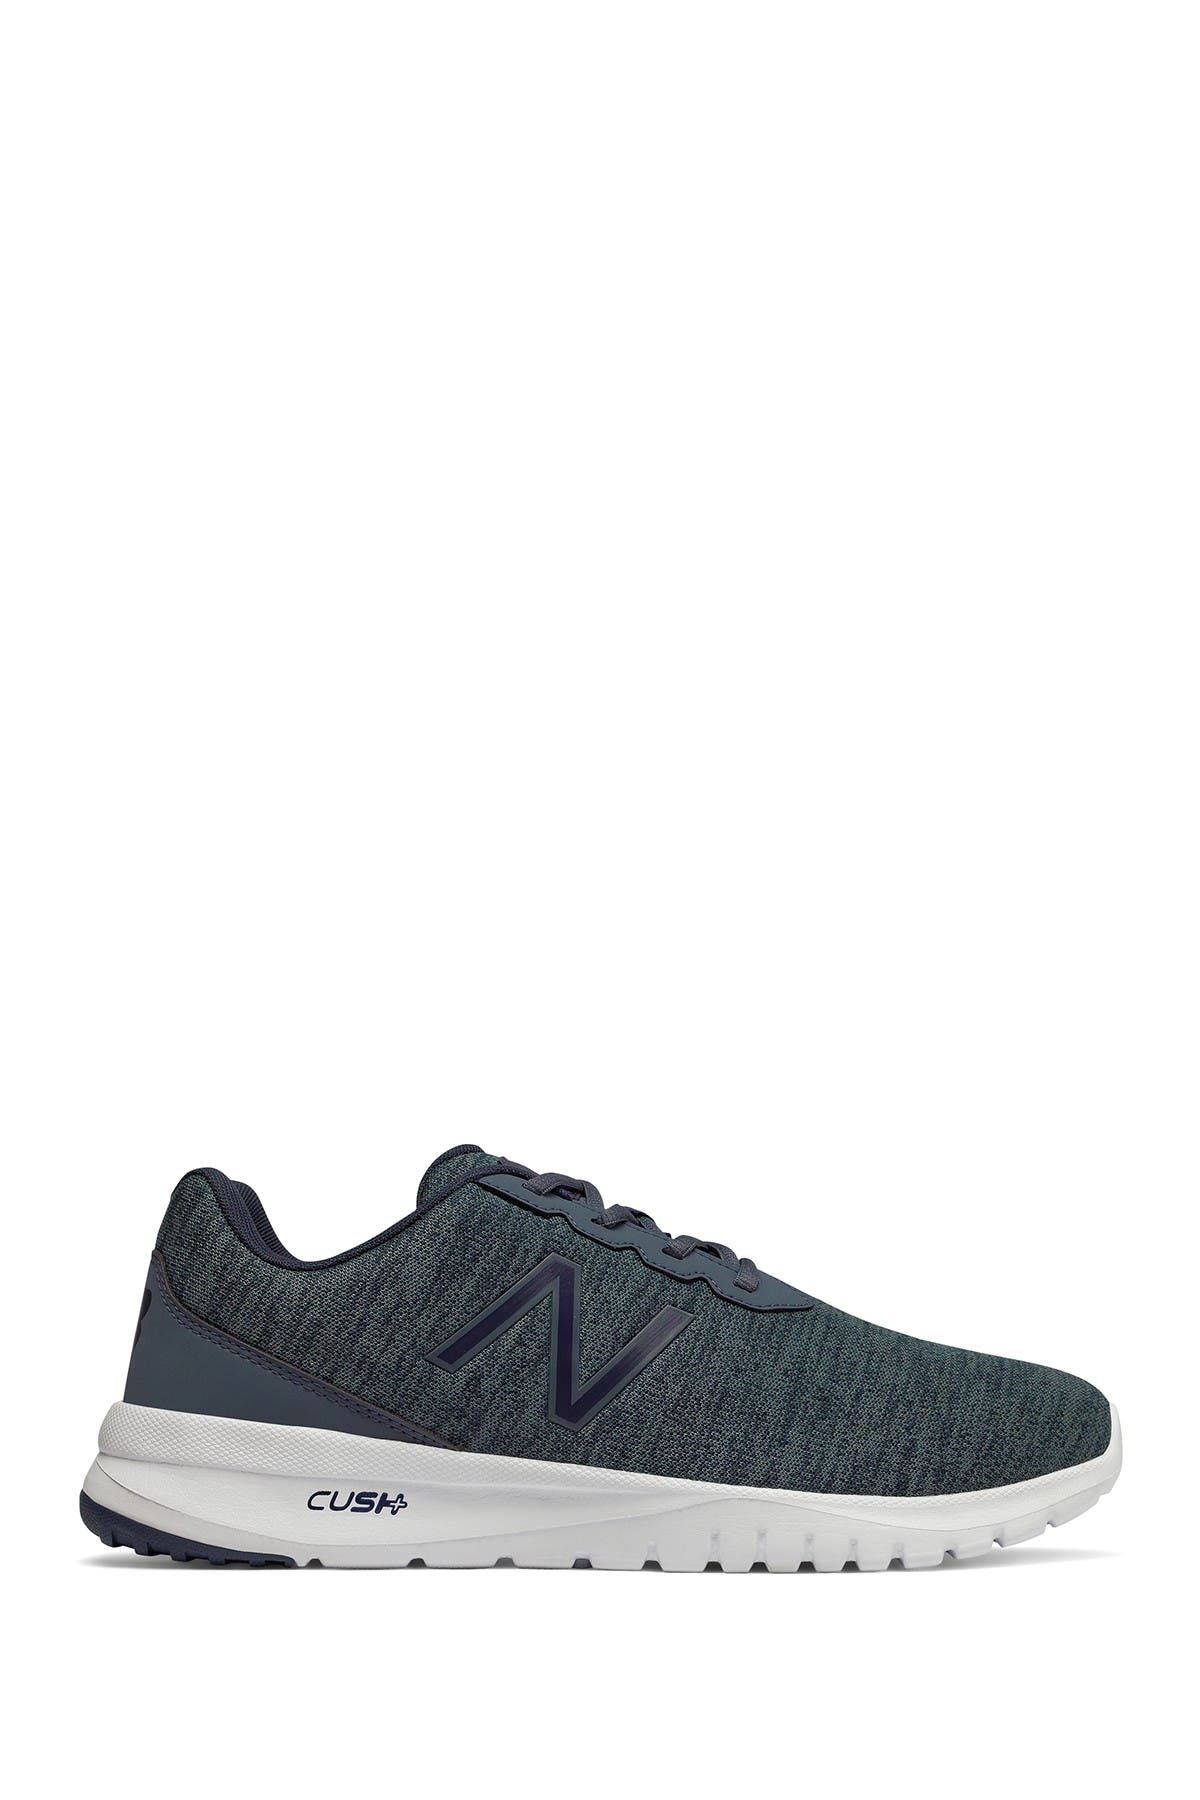 New Balance | A33 Sneaker | Nordstrom Rack